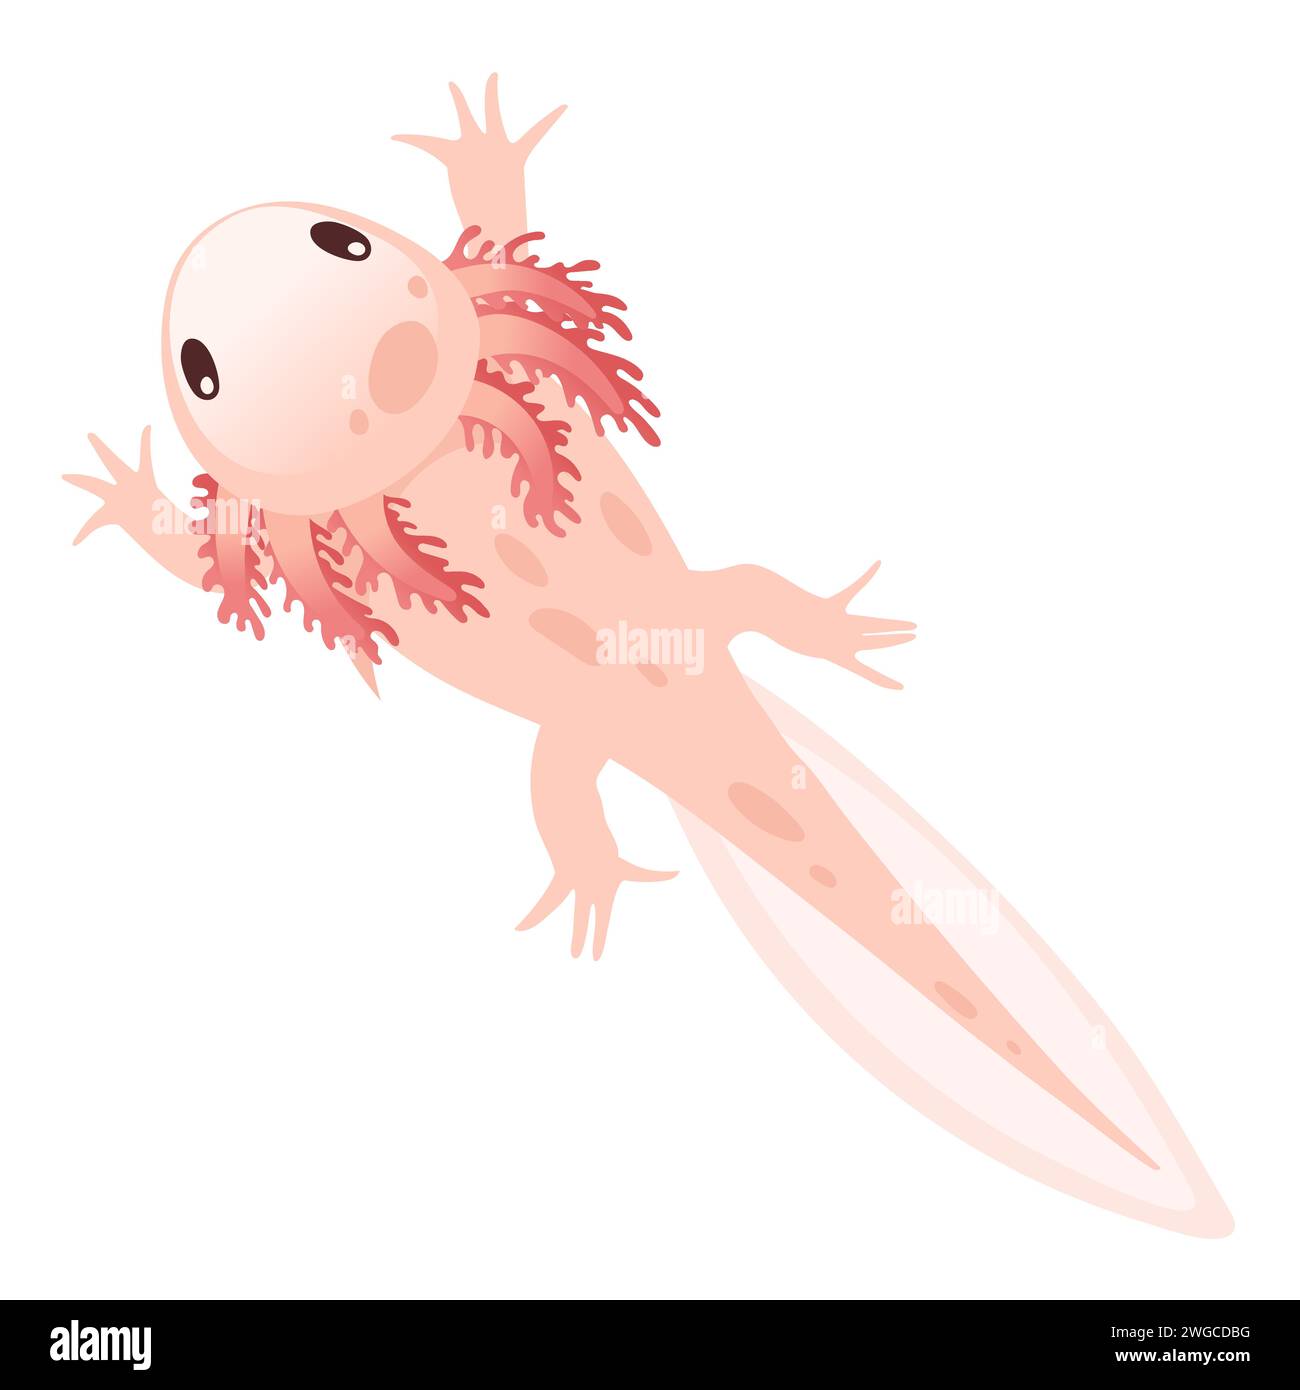 Cute cartoon axolotl pink color amphibian animal vector illustration ...